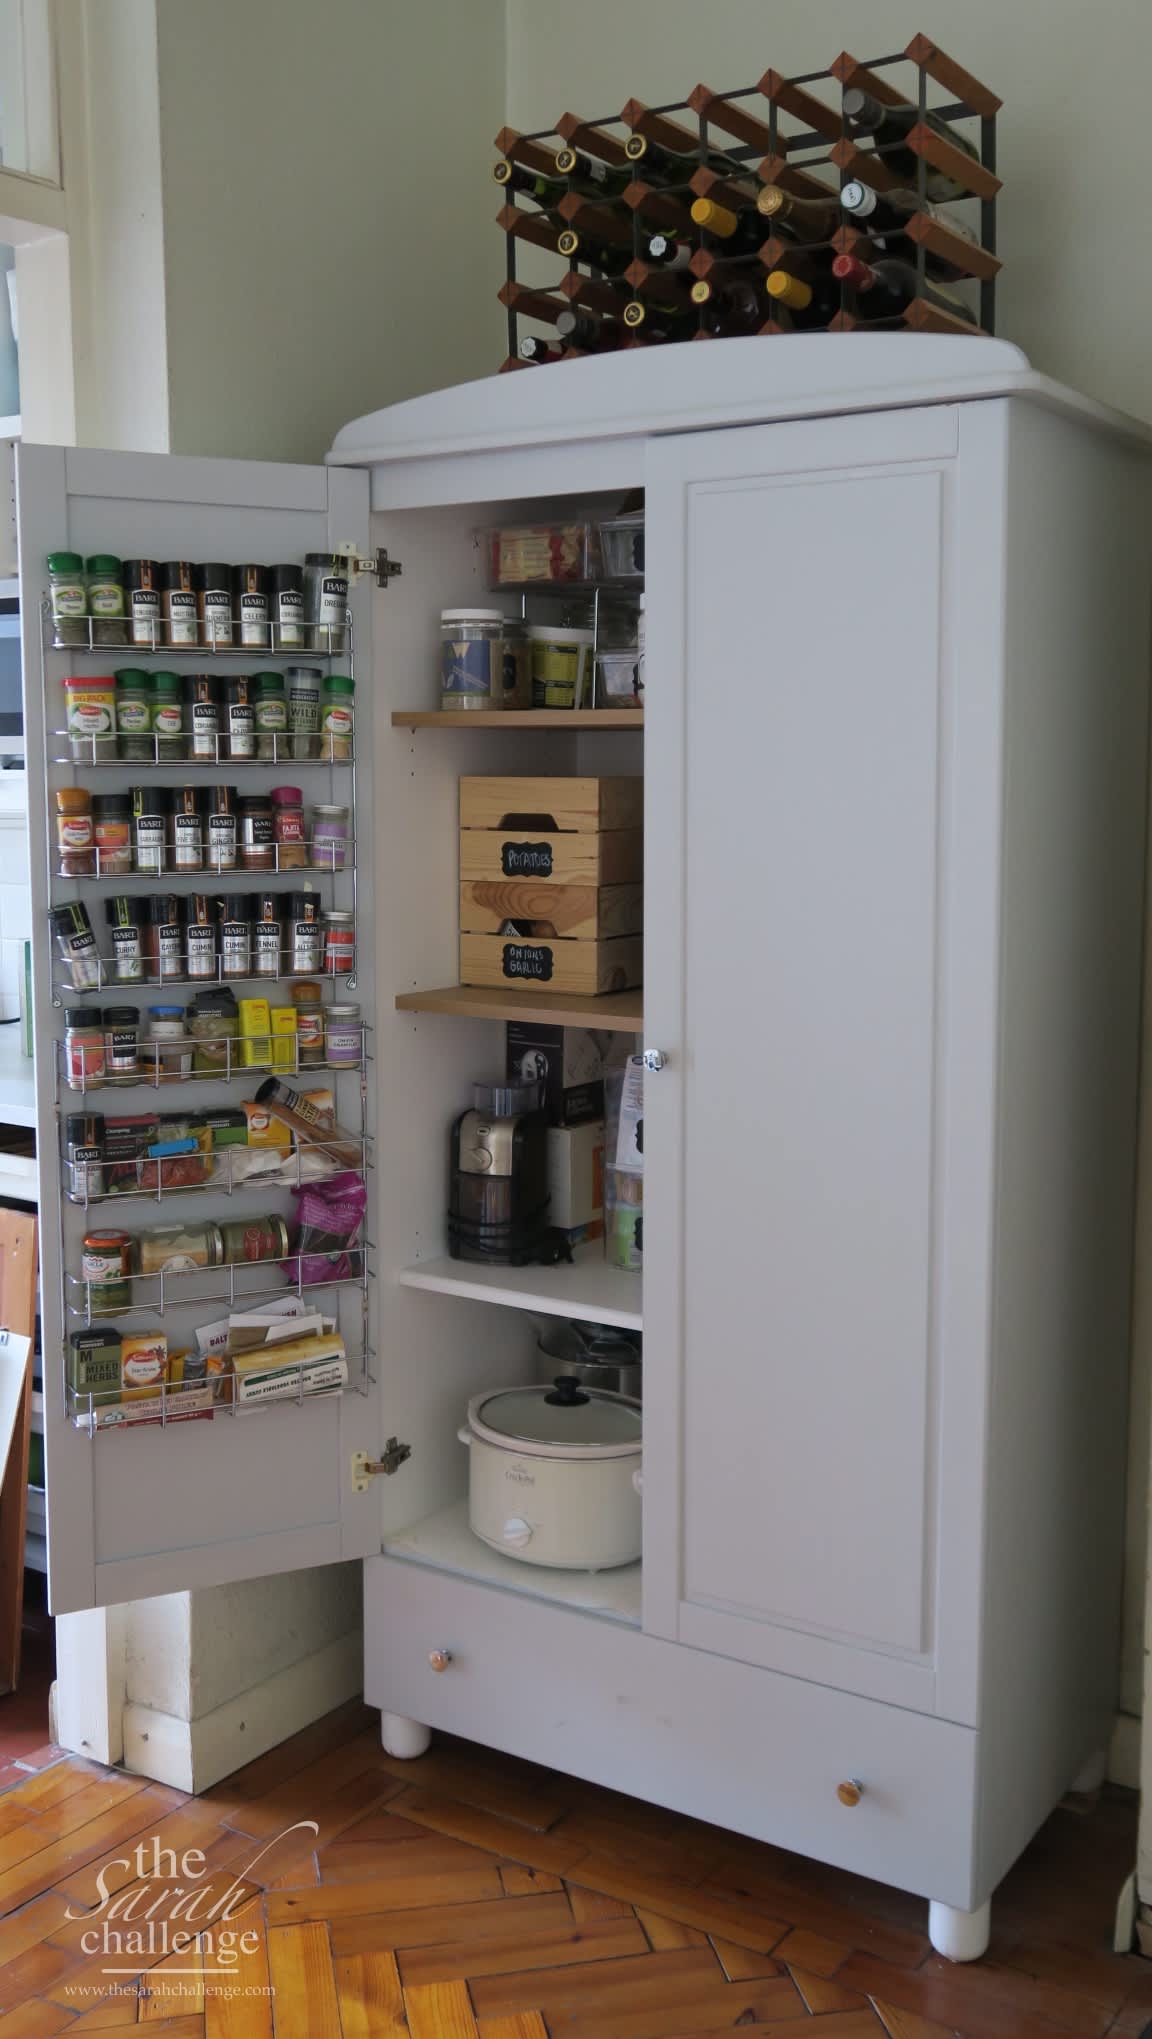 Ikea Kitchen Food Storage Home And Aplliances